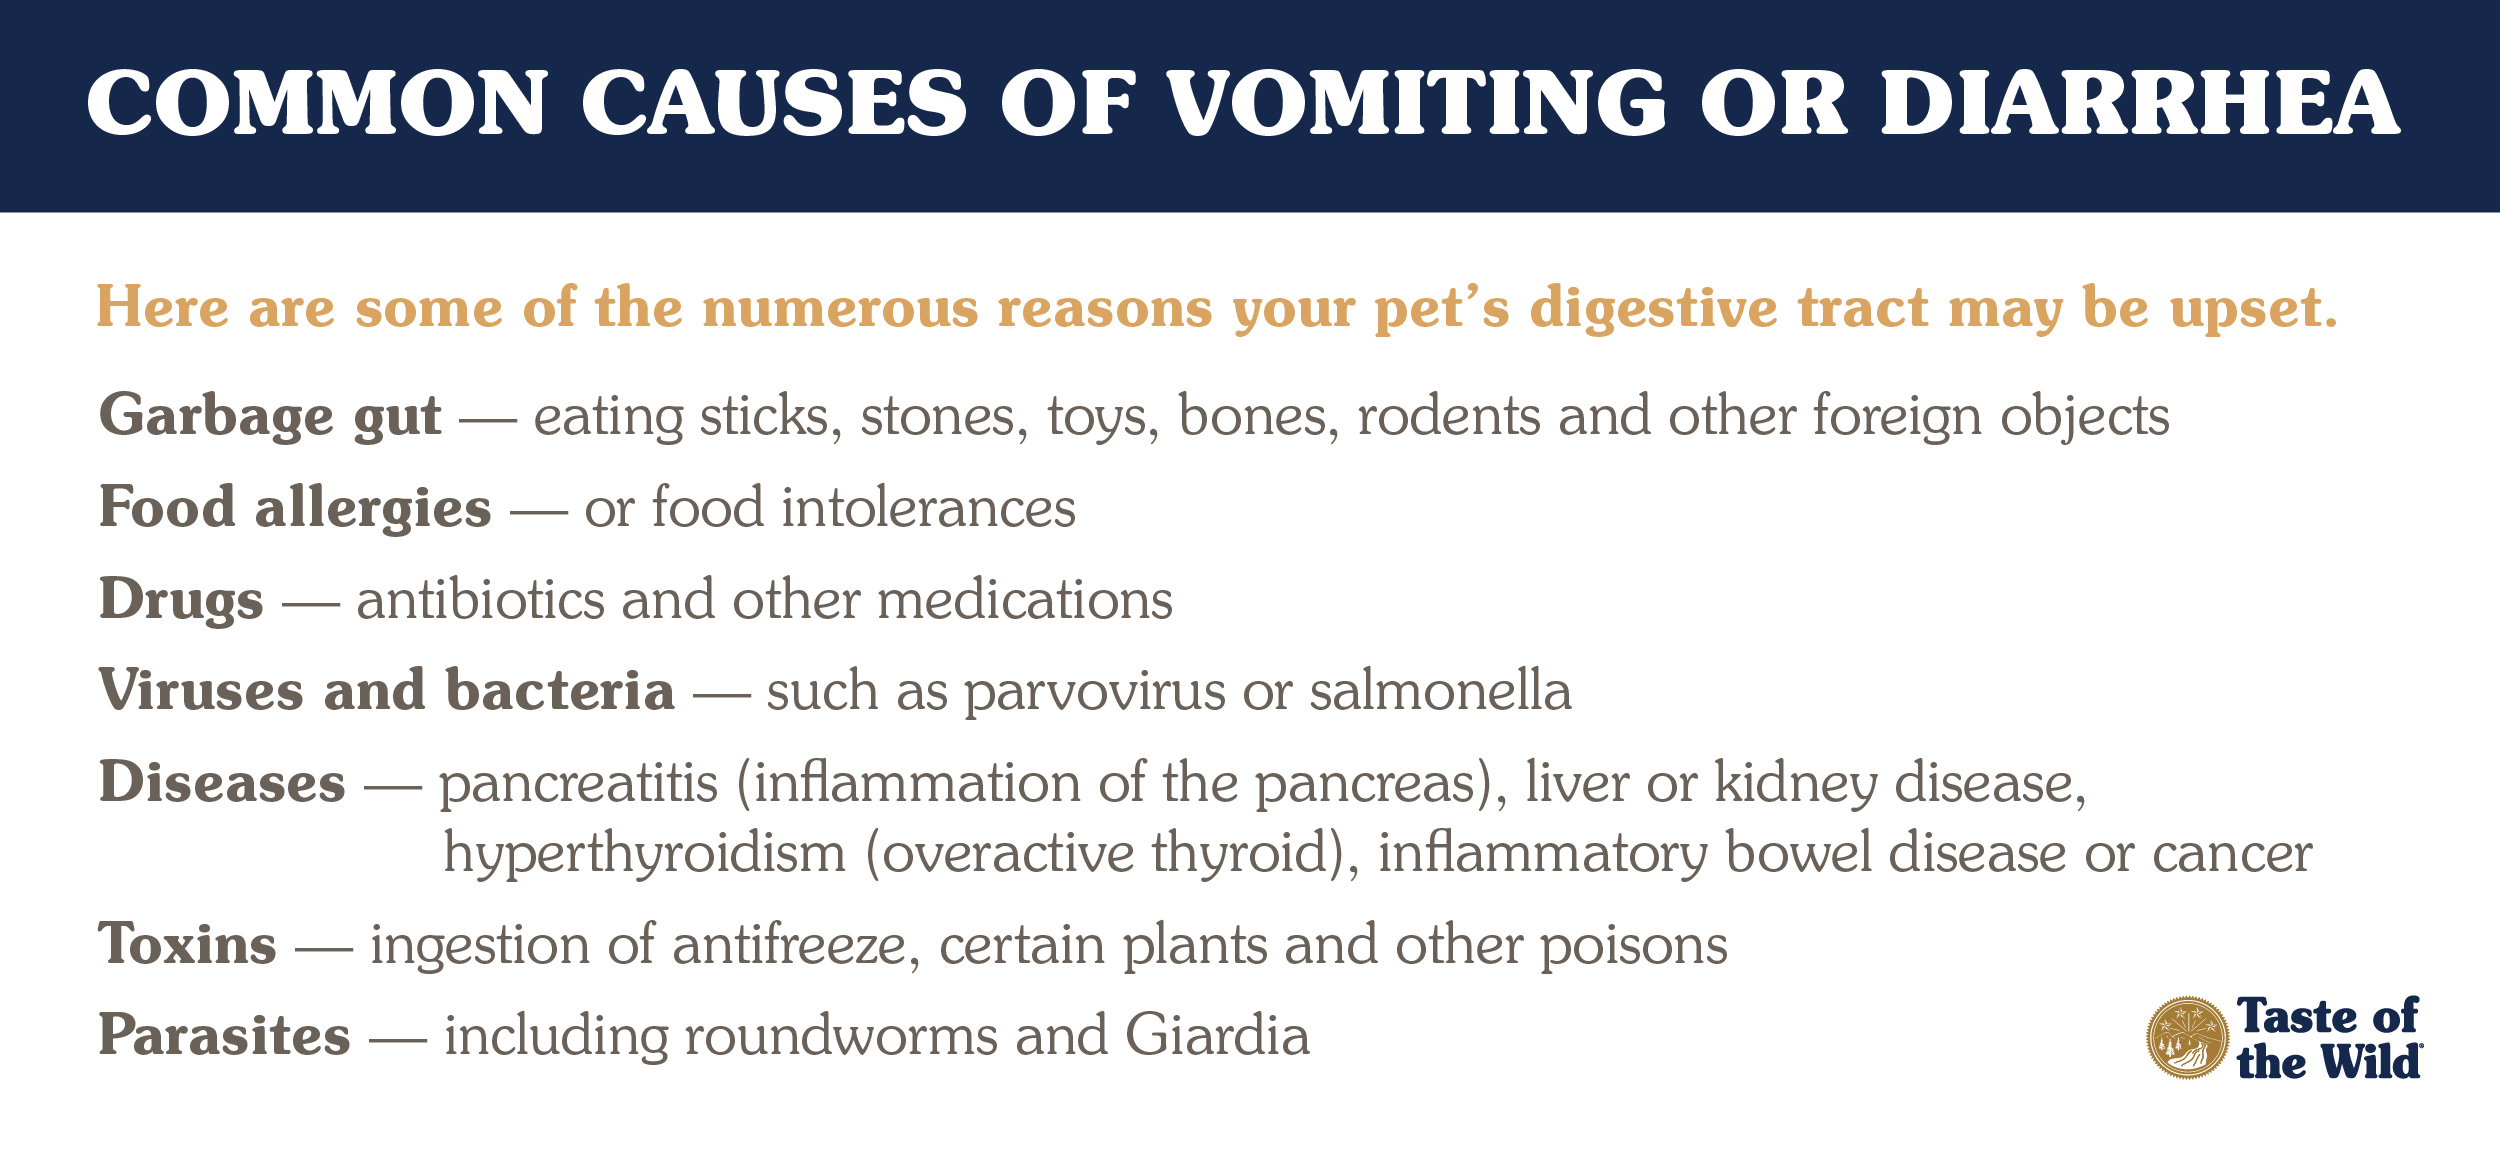 Common causes of vomiting or diarrhea graphic.